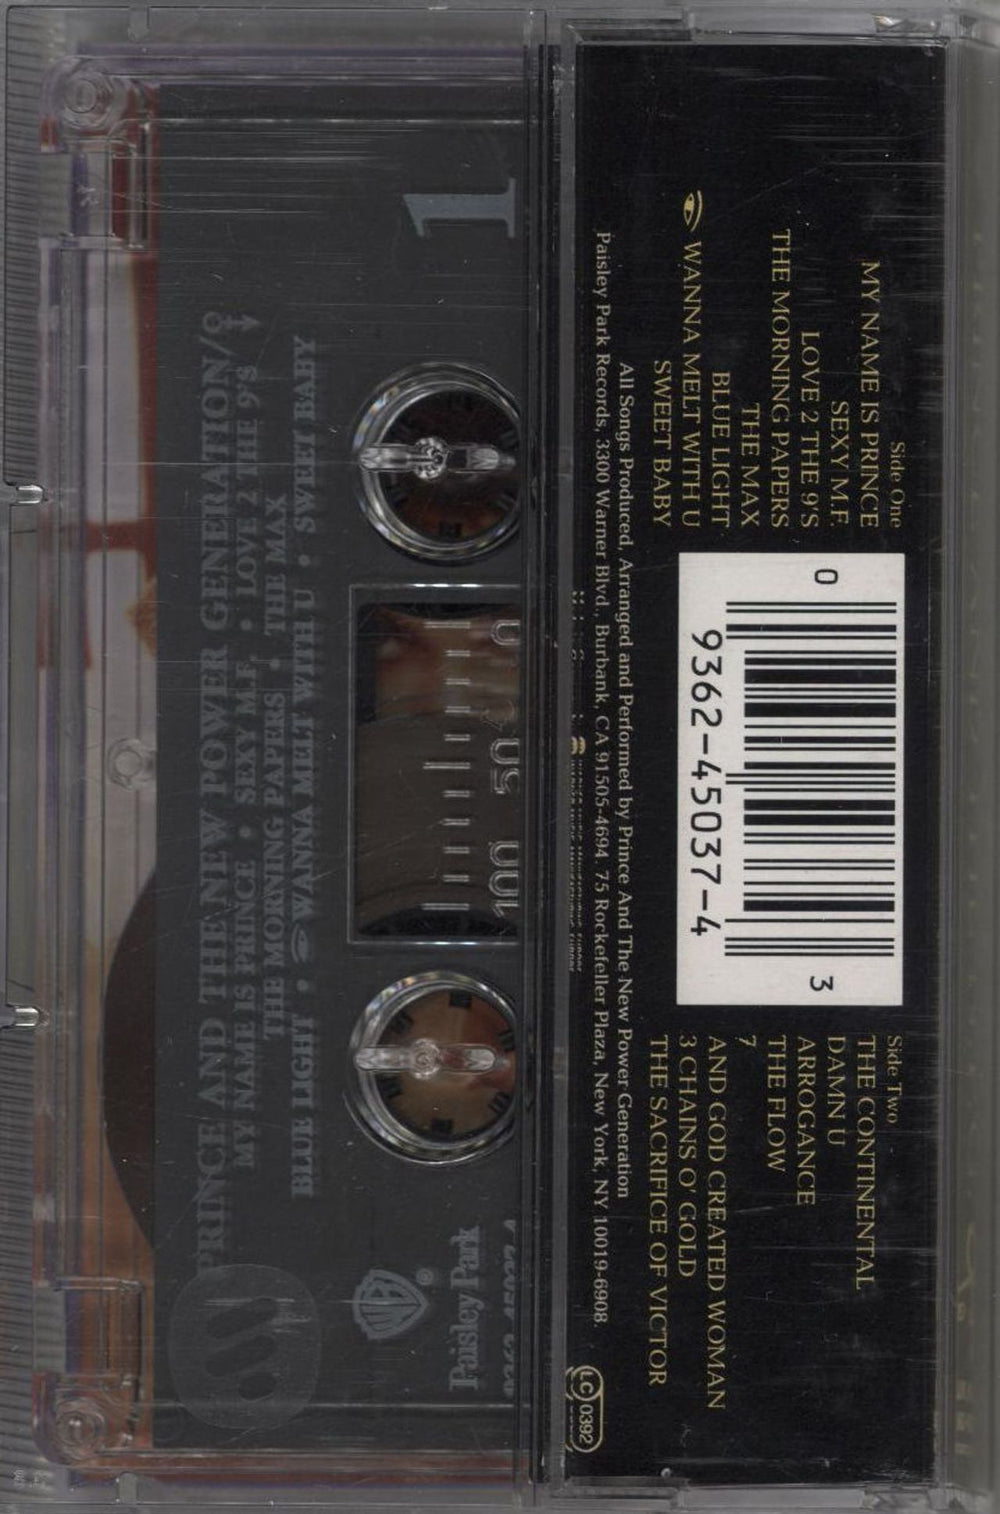 Prince Love Symbol UK cassette album 093624503743